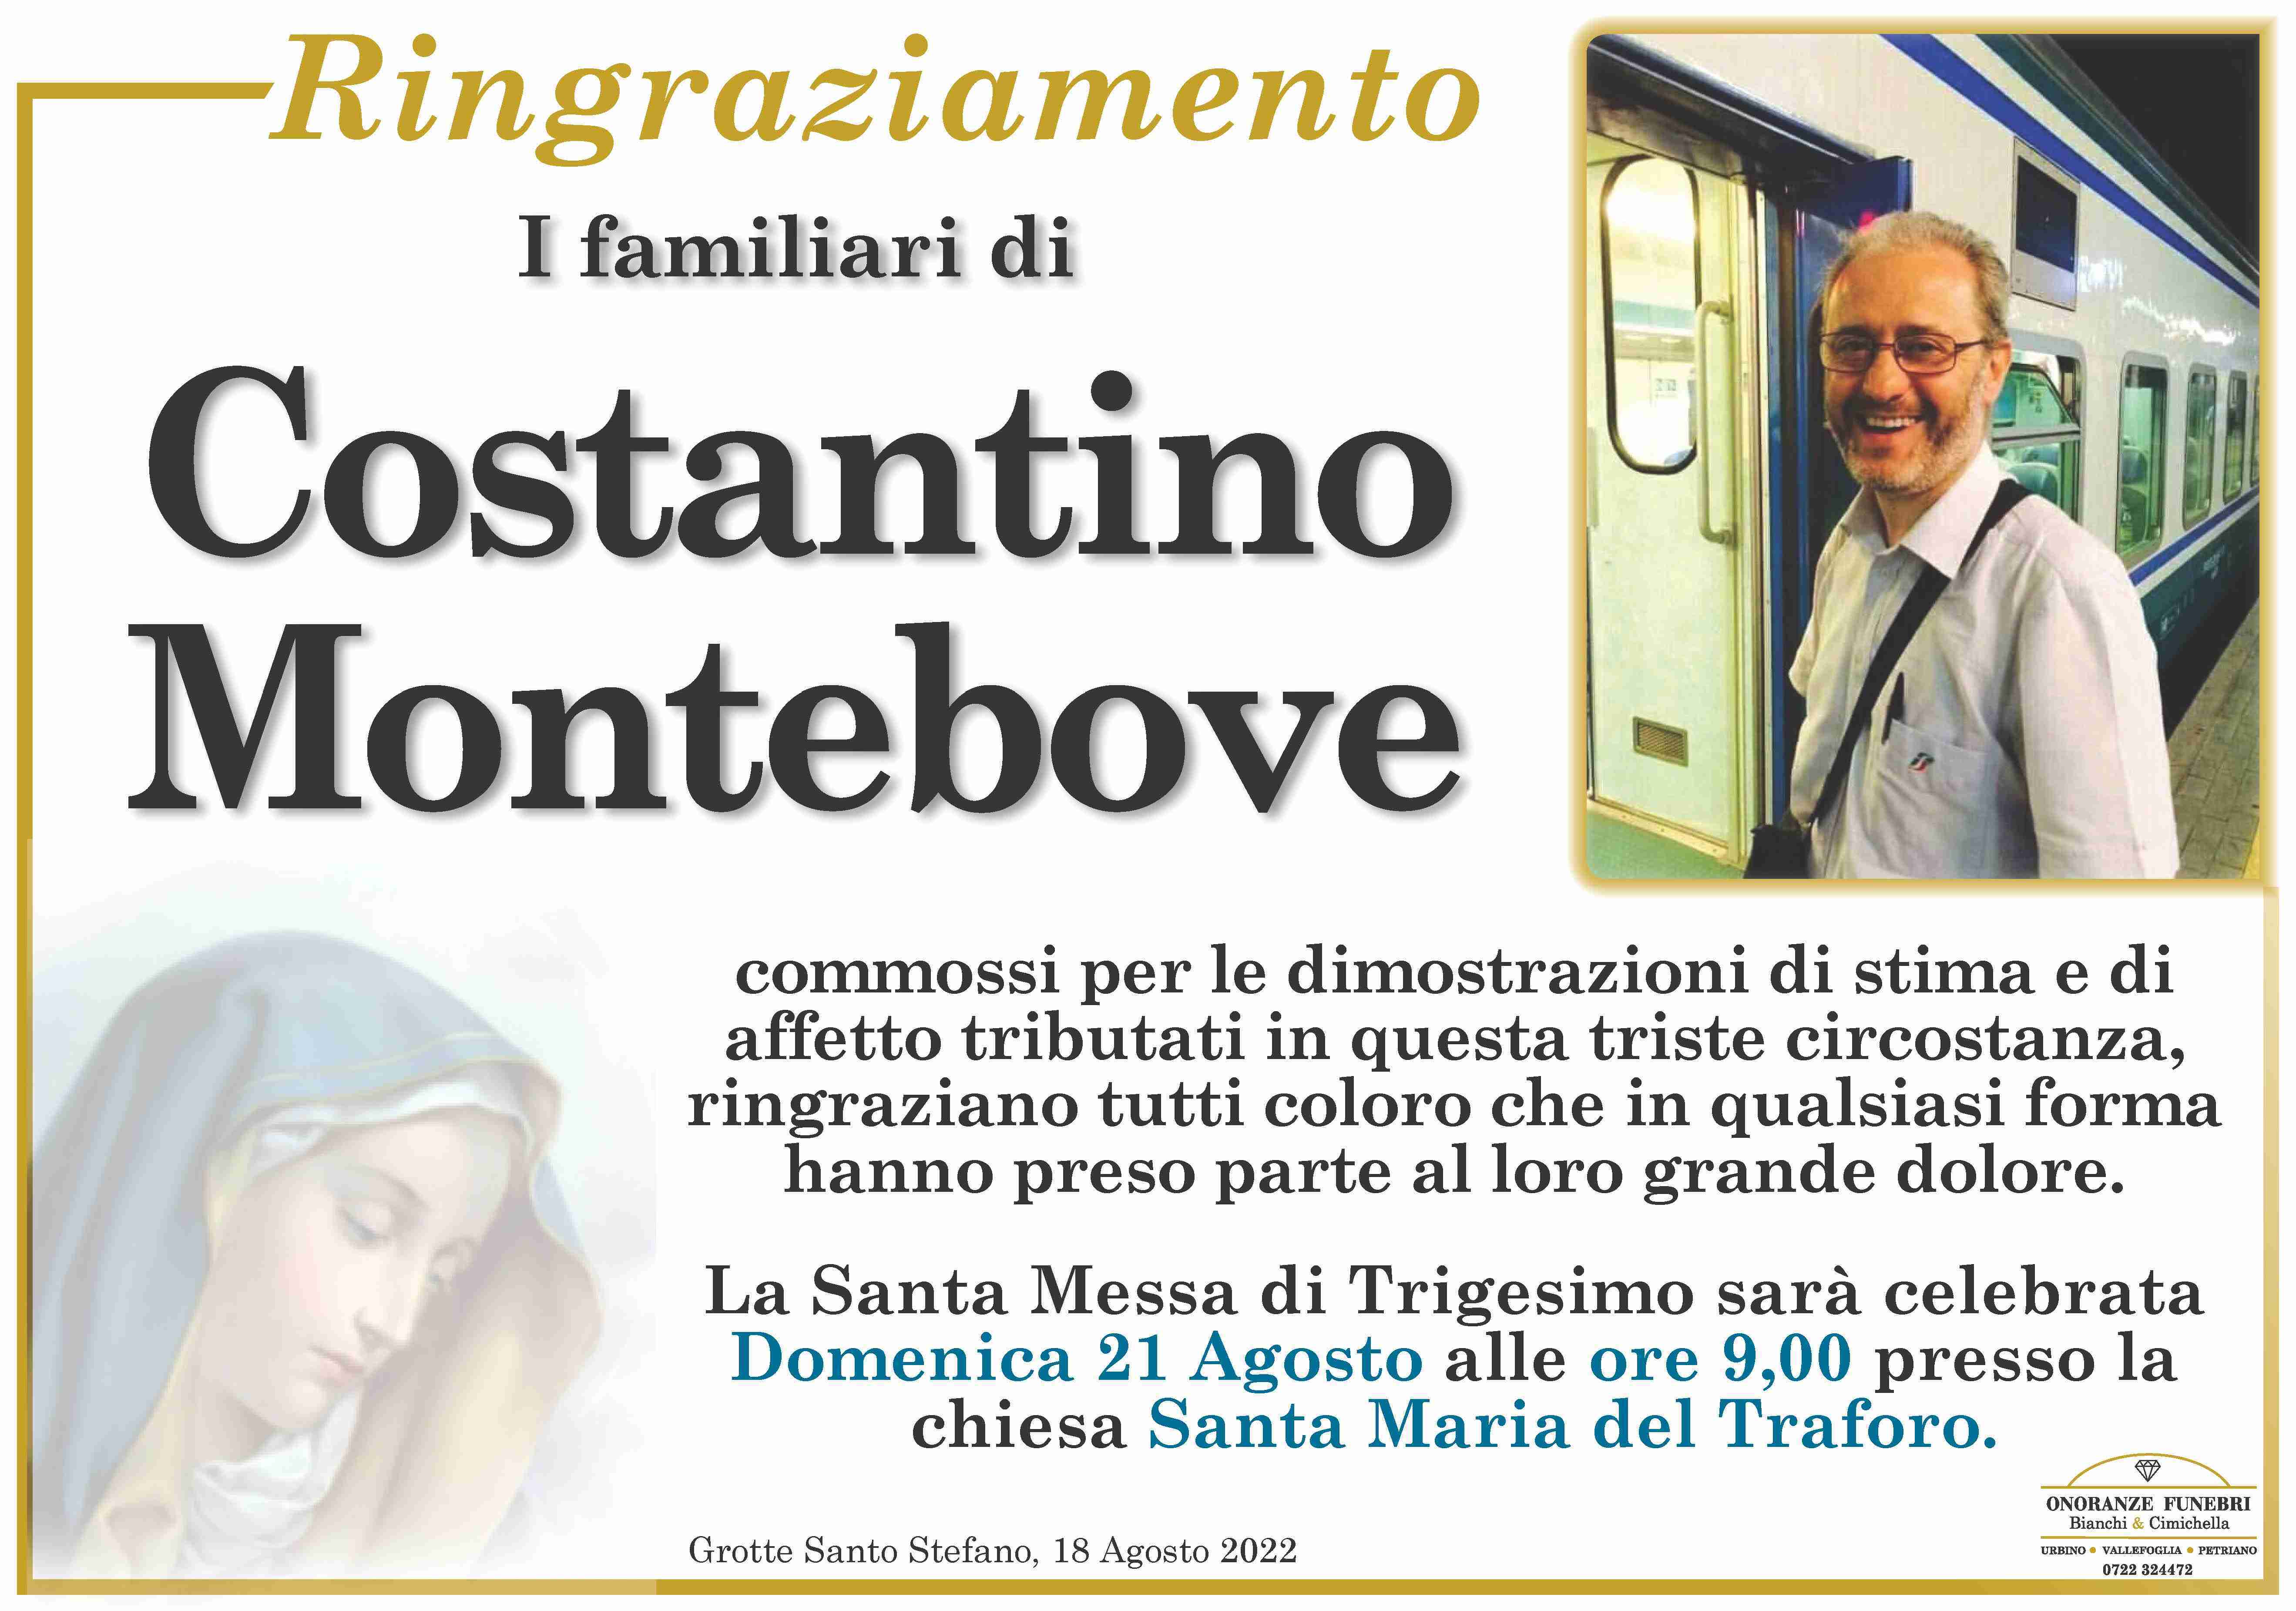 Costantino Montebove